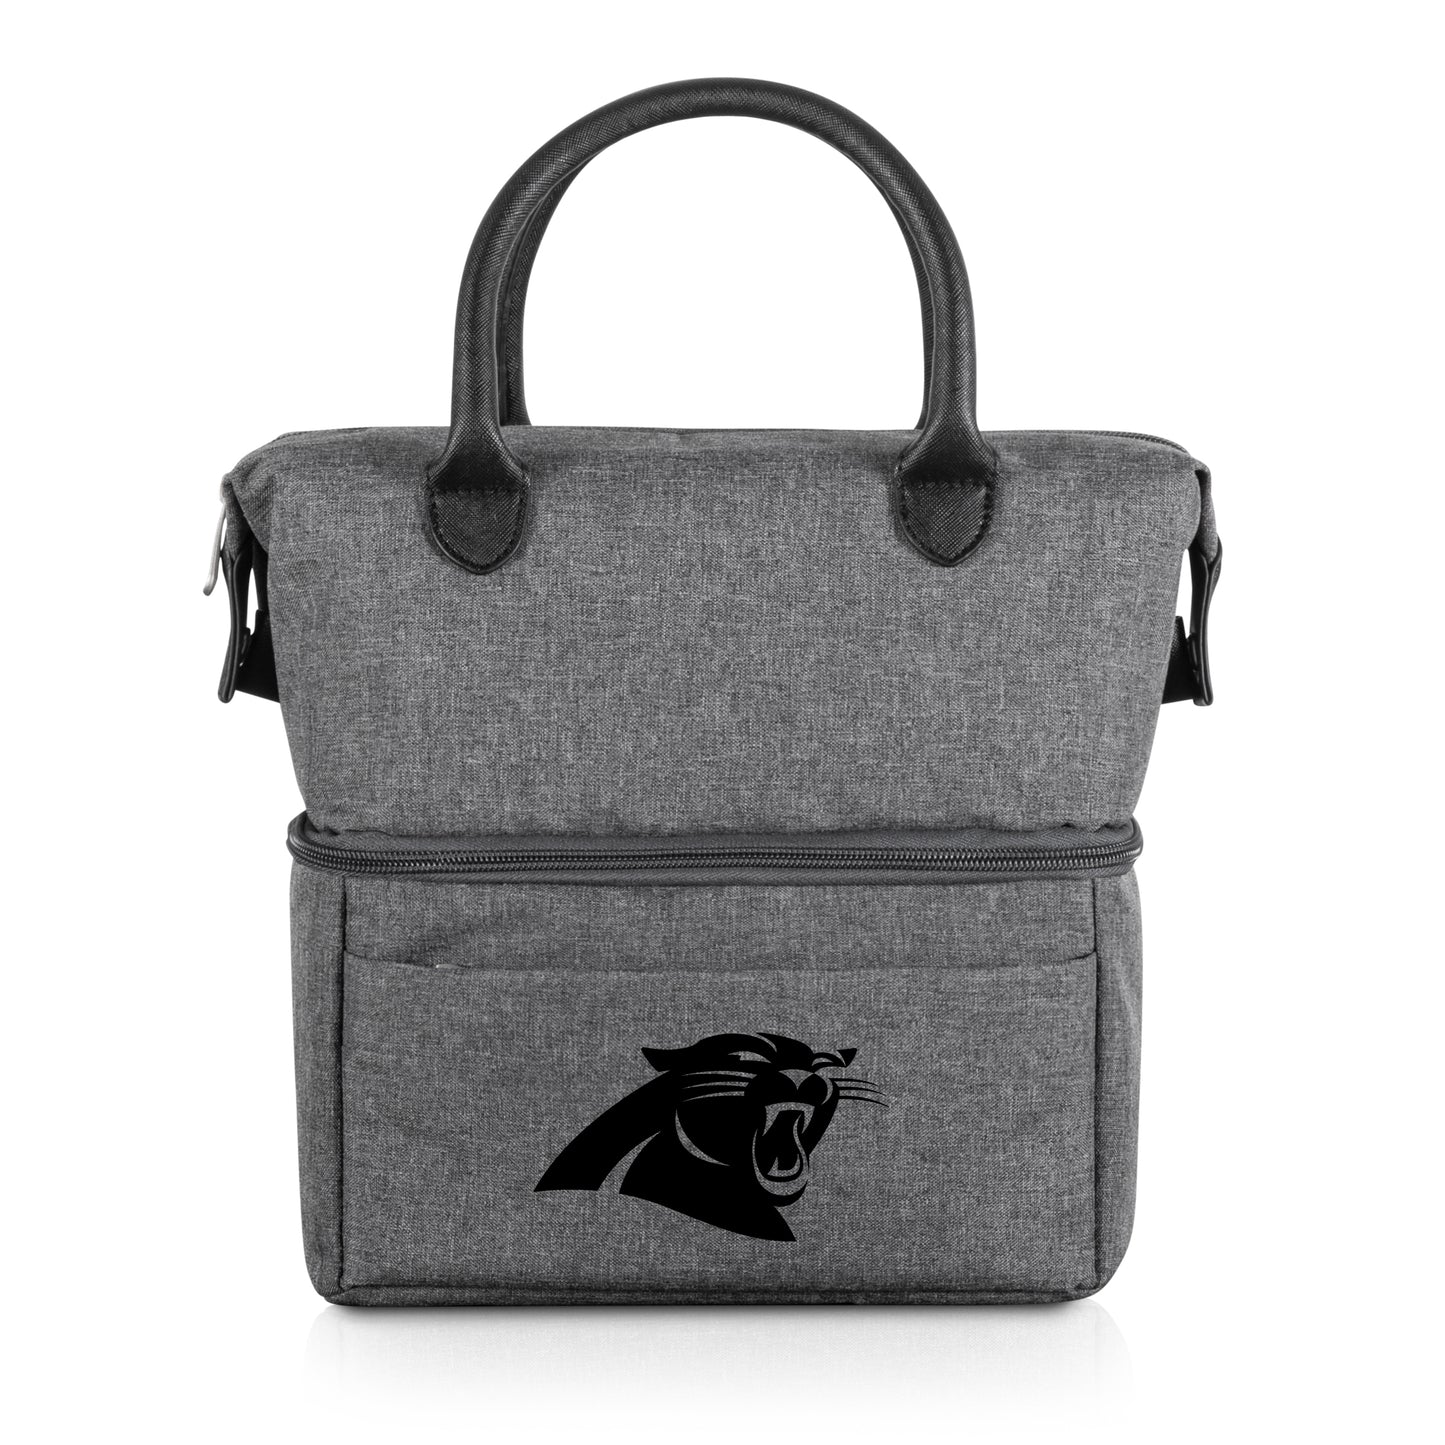 Carolina Panthers - Urban Lunch Bag